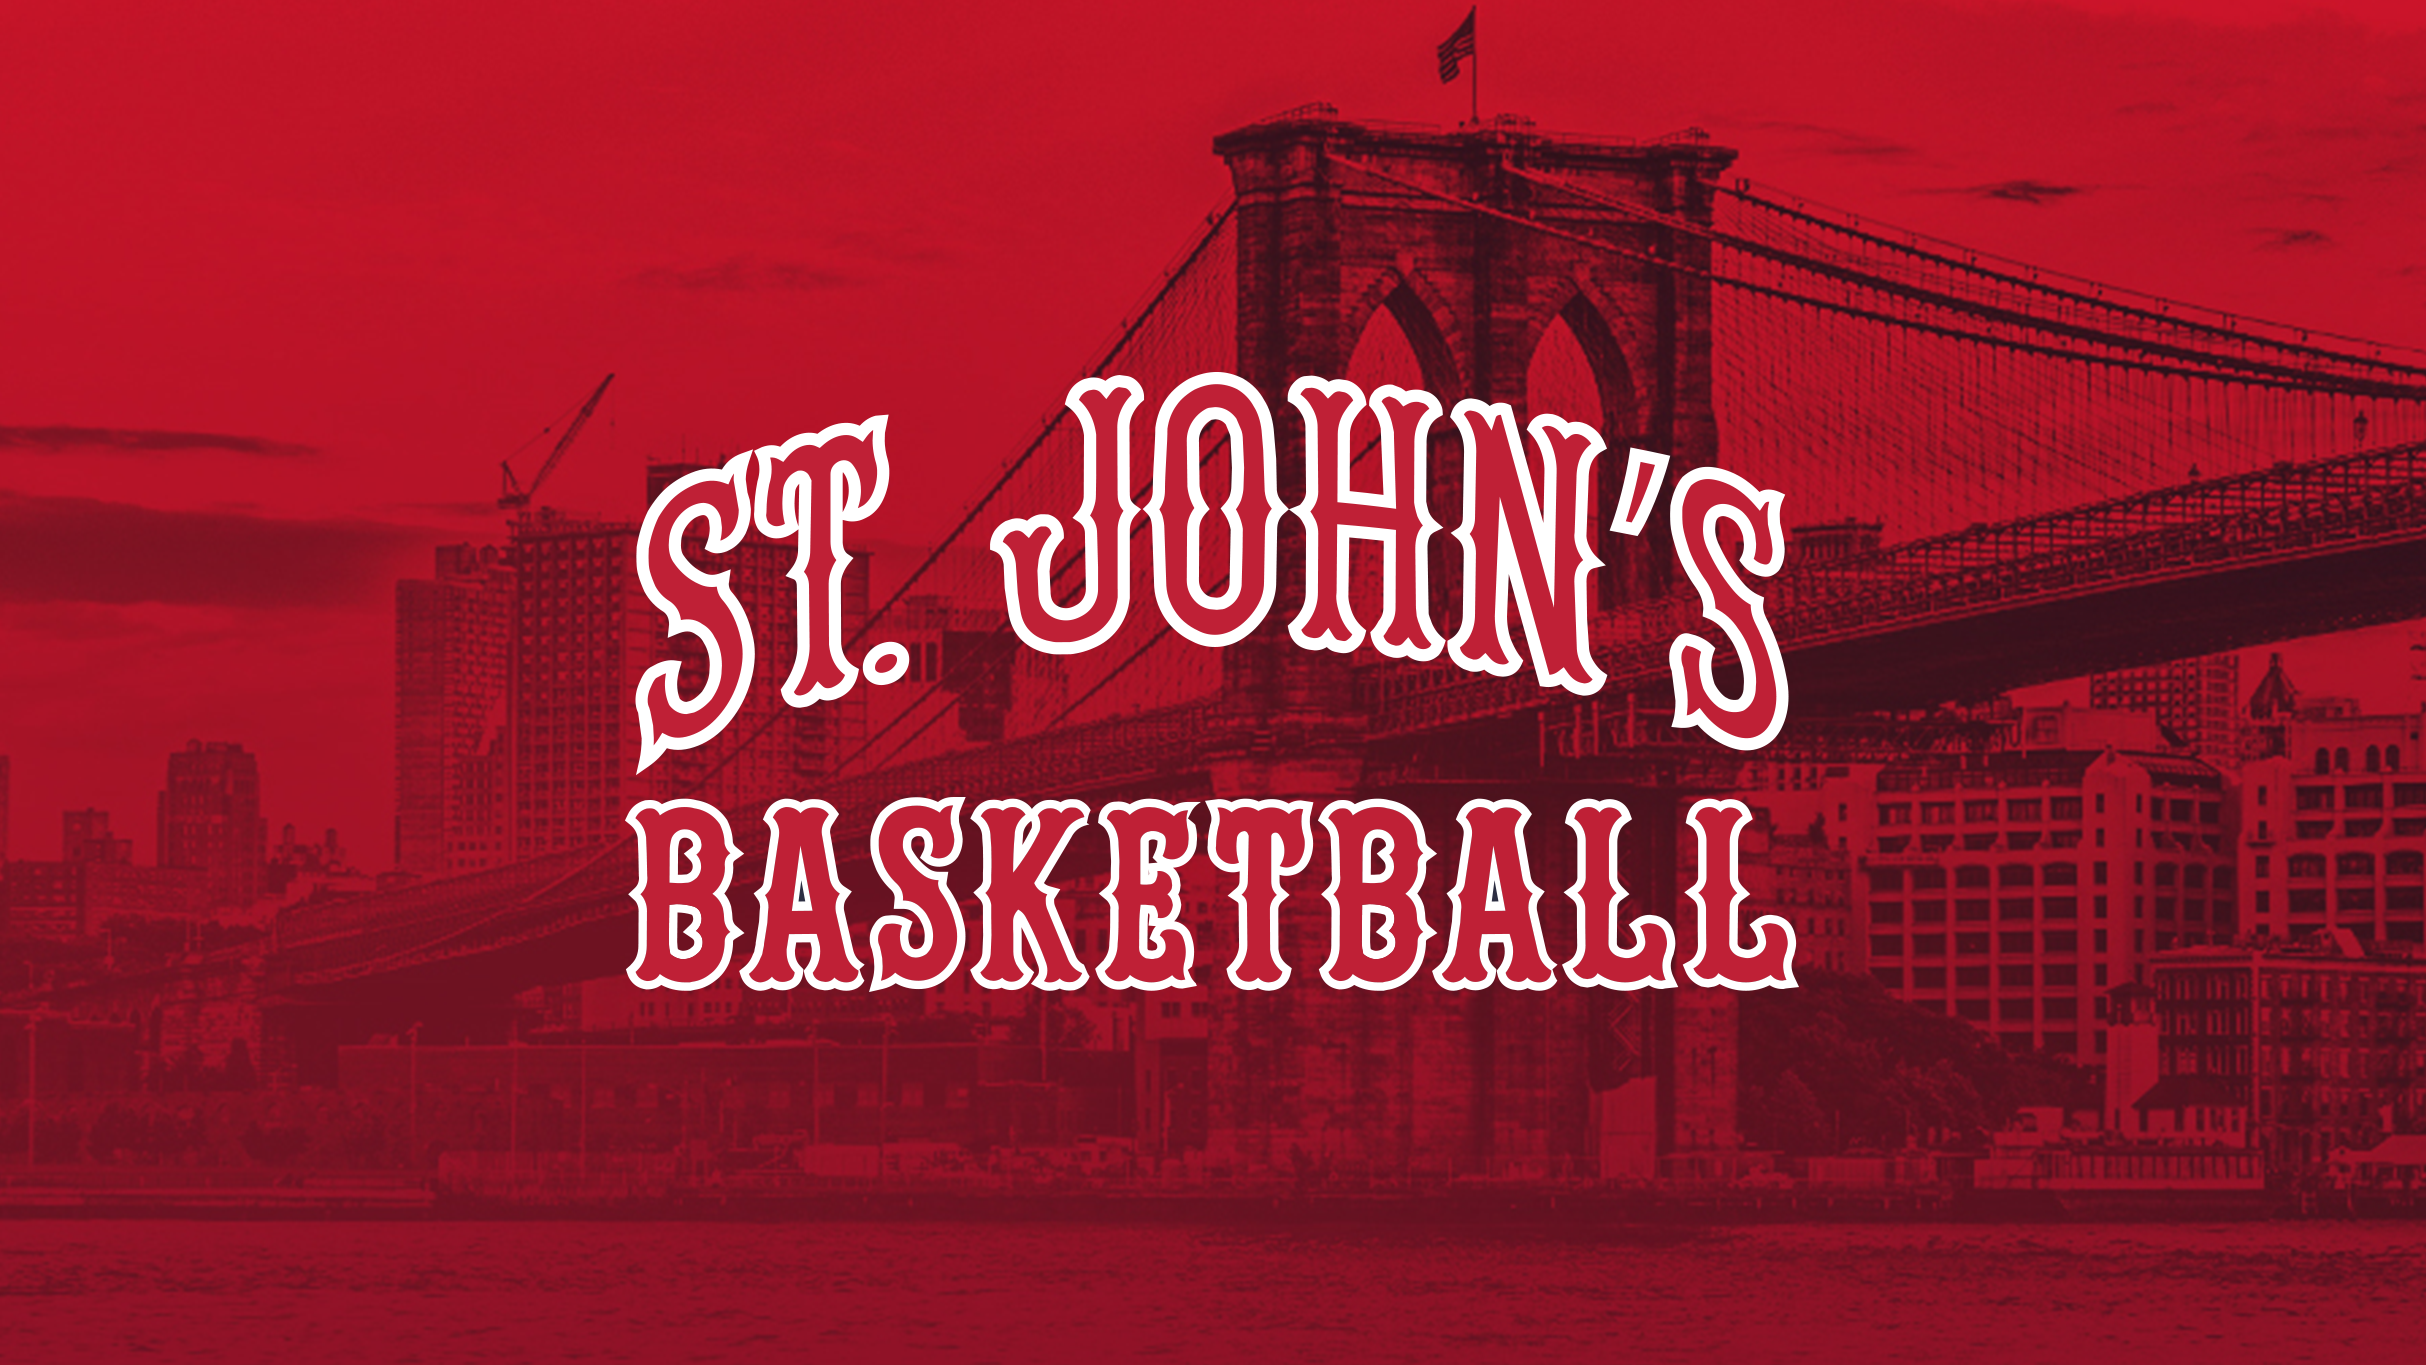 St. John's Red Storm Men's Basketball V. Marquette in New York promo photo for Chase Cardholder Preferred Seating presale offer code